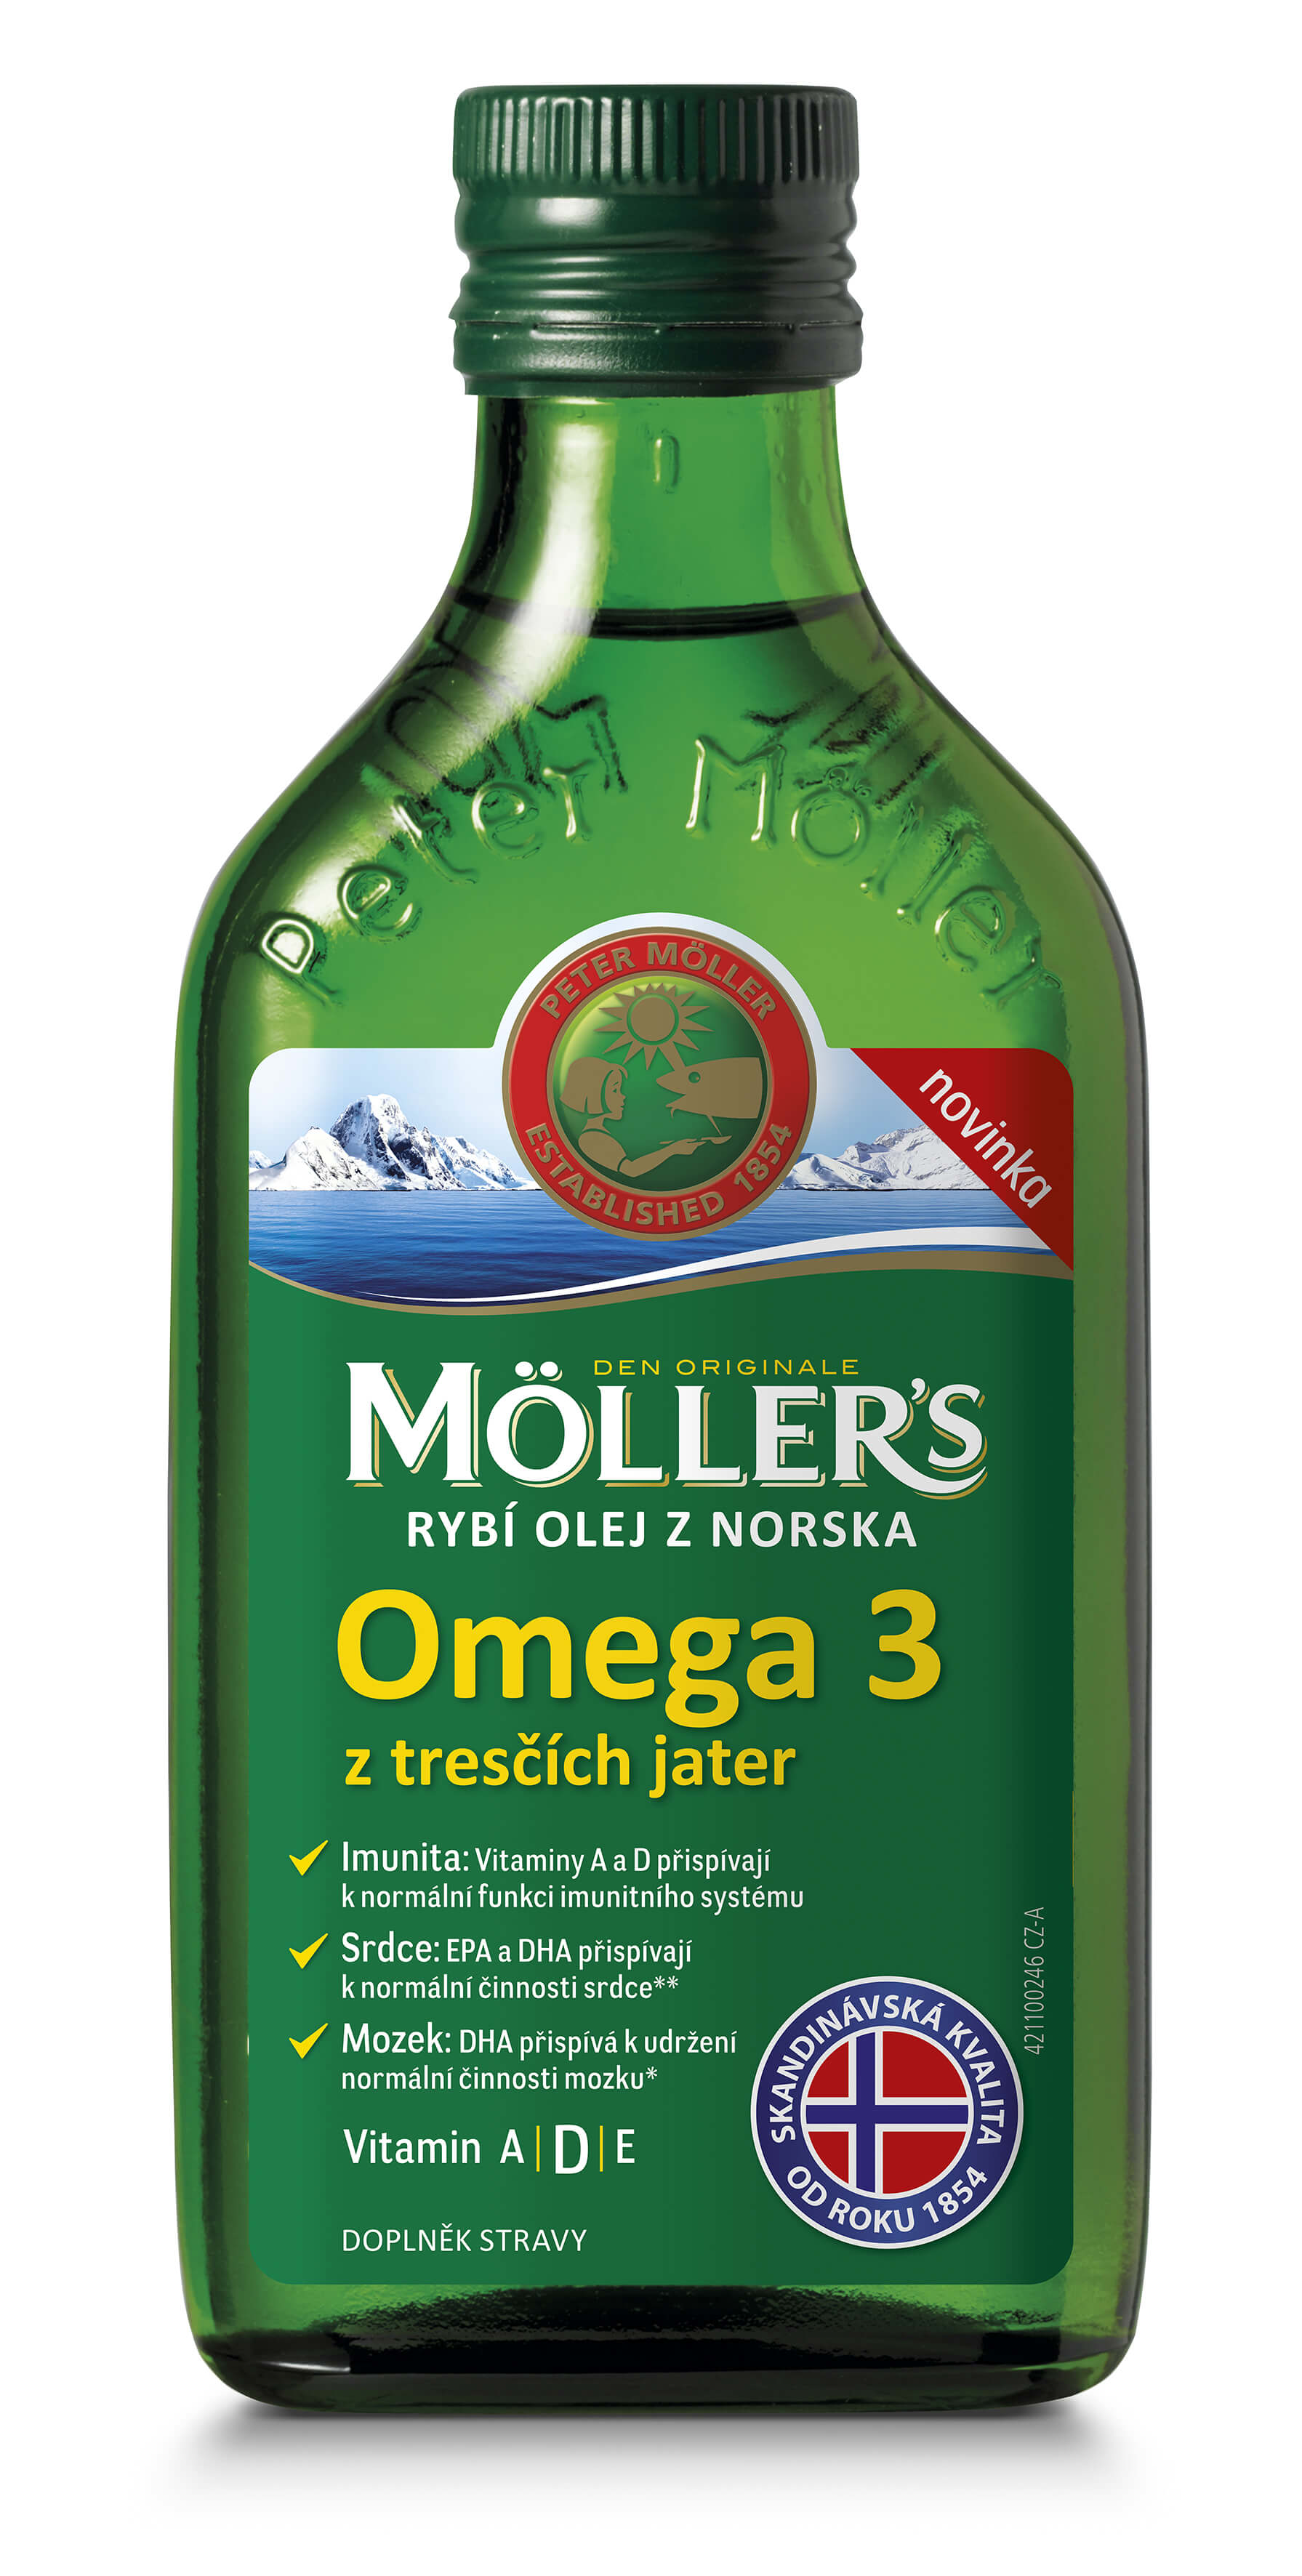 Möller´s Möller´s rybí olej Omega 3 z tresčích jater 250 ml